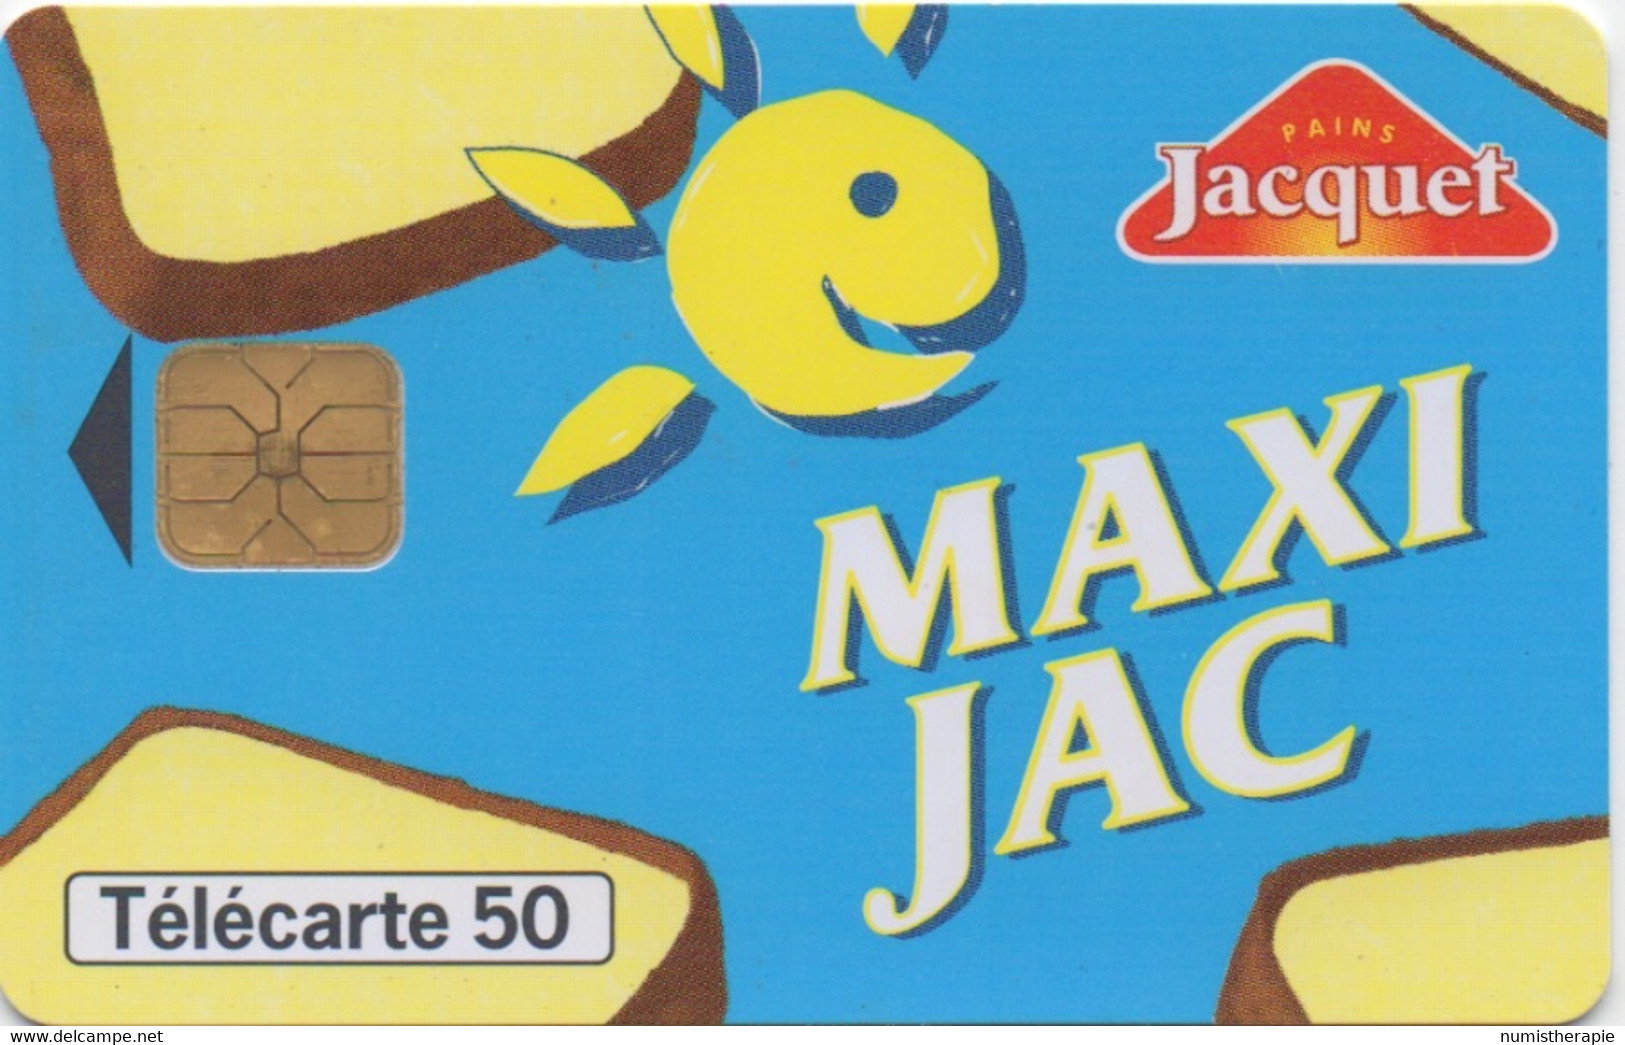 Pains Jacquet Maxi Jac 1999 - Alimentación